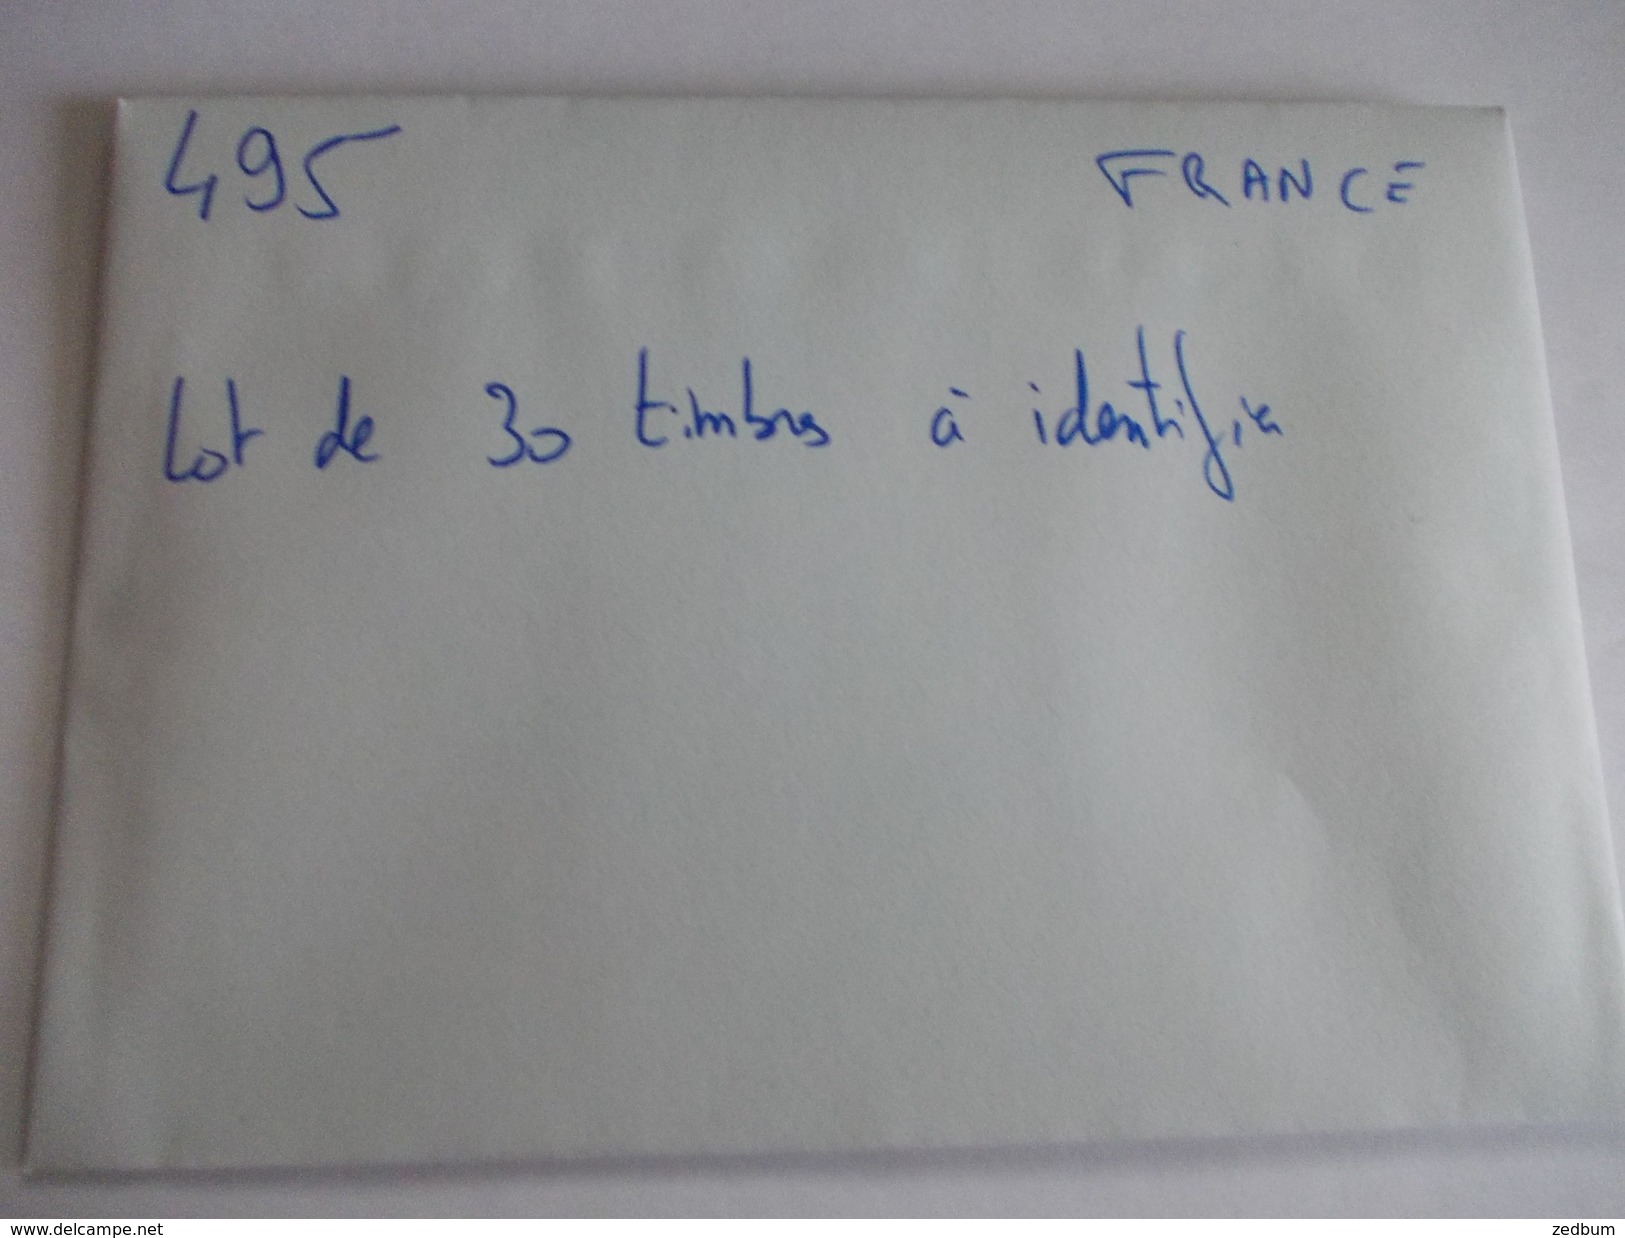 TIMBRE France Lot De 30 Timbres à Identifier N° 495 - Lots & Kiloware (mixtures) - Max. 999 Stamps